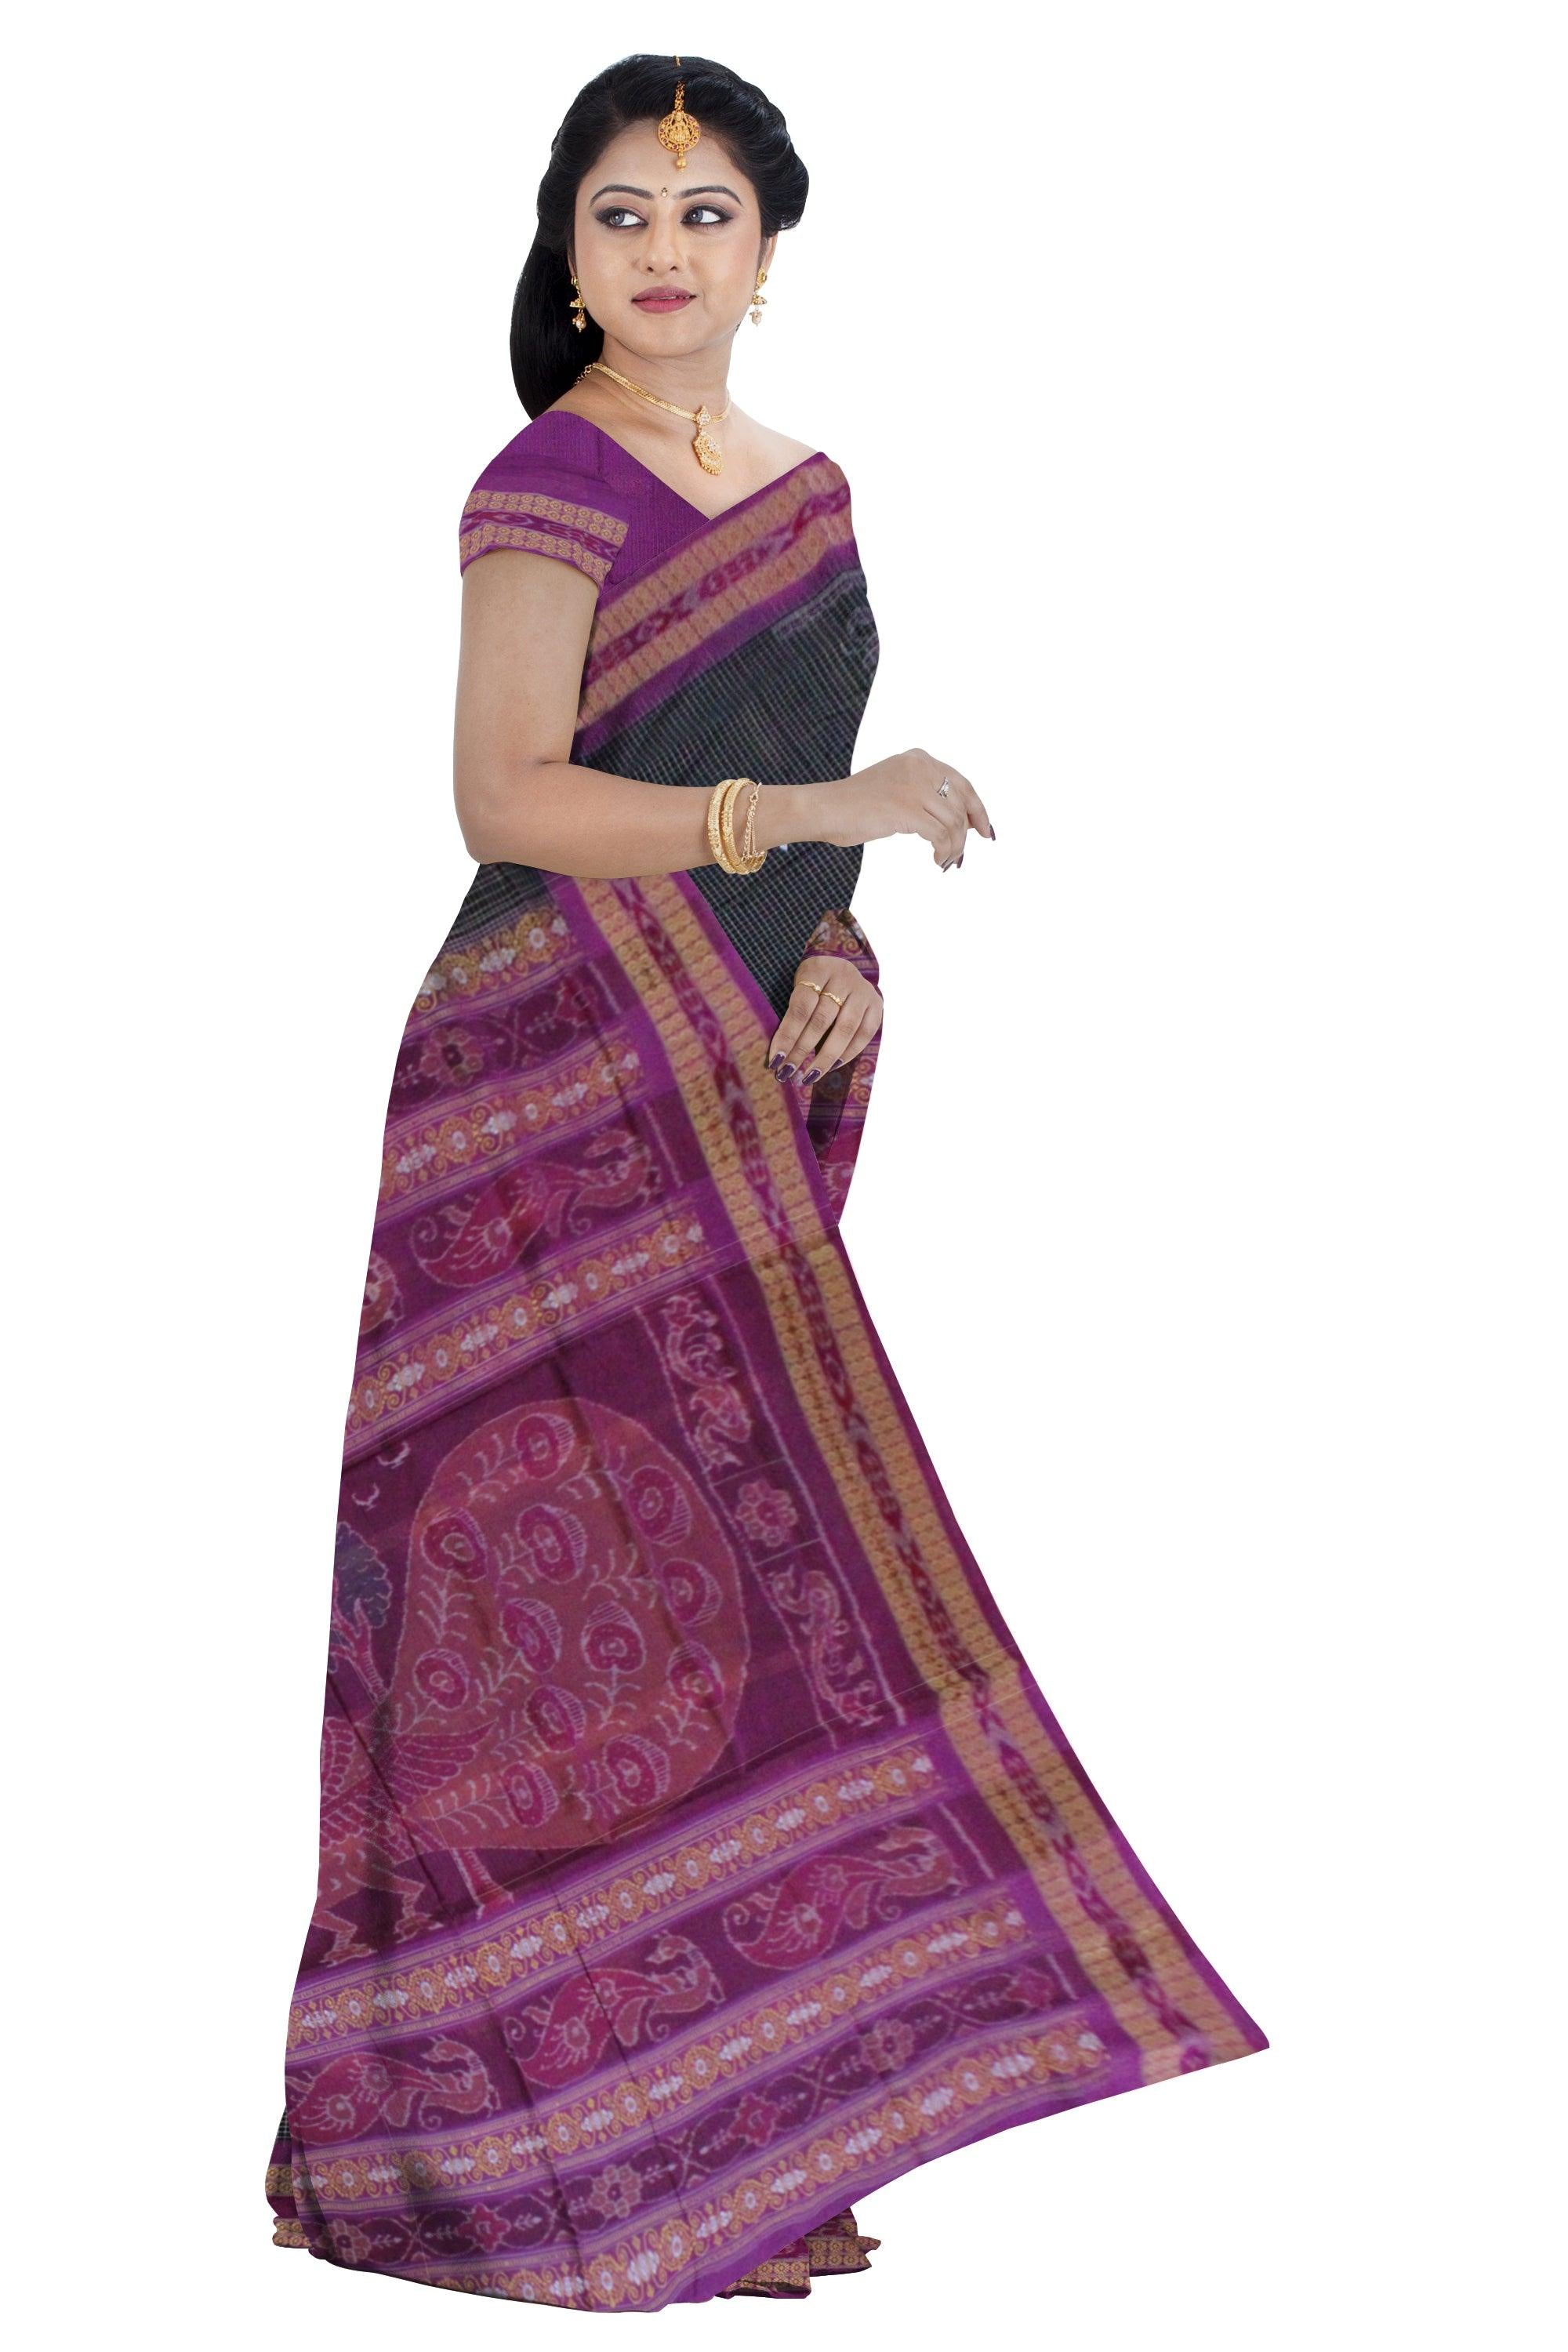 Mayur design Sambalpuri cotton saree  in Black - Koshali Arts & Crafts Enterprise